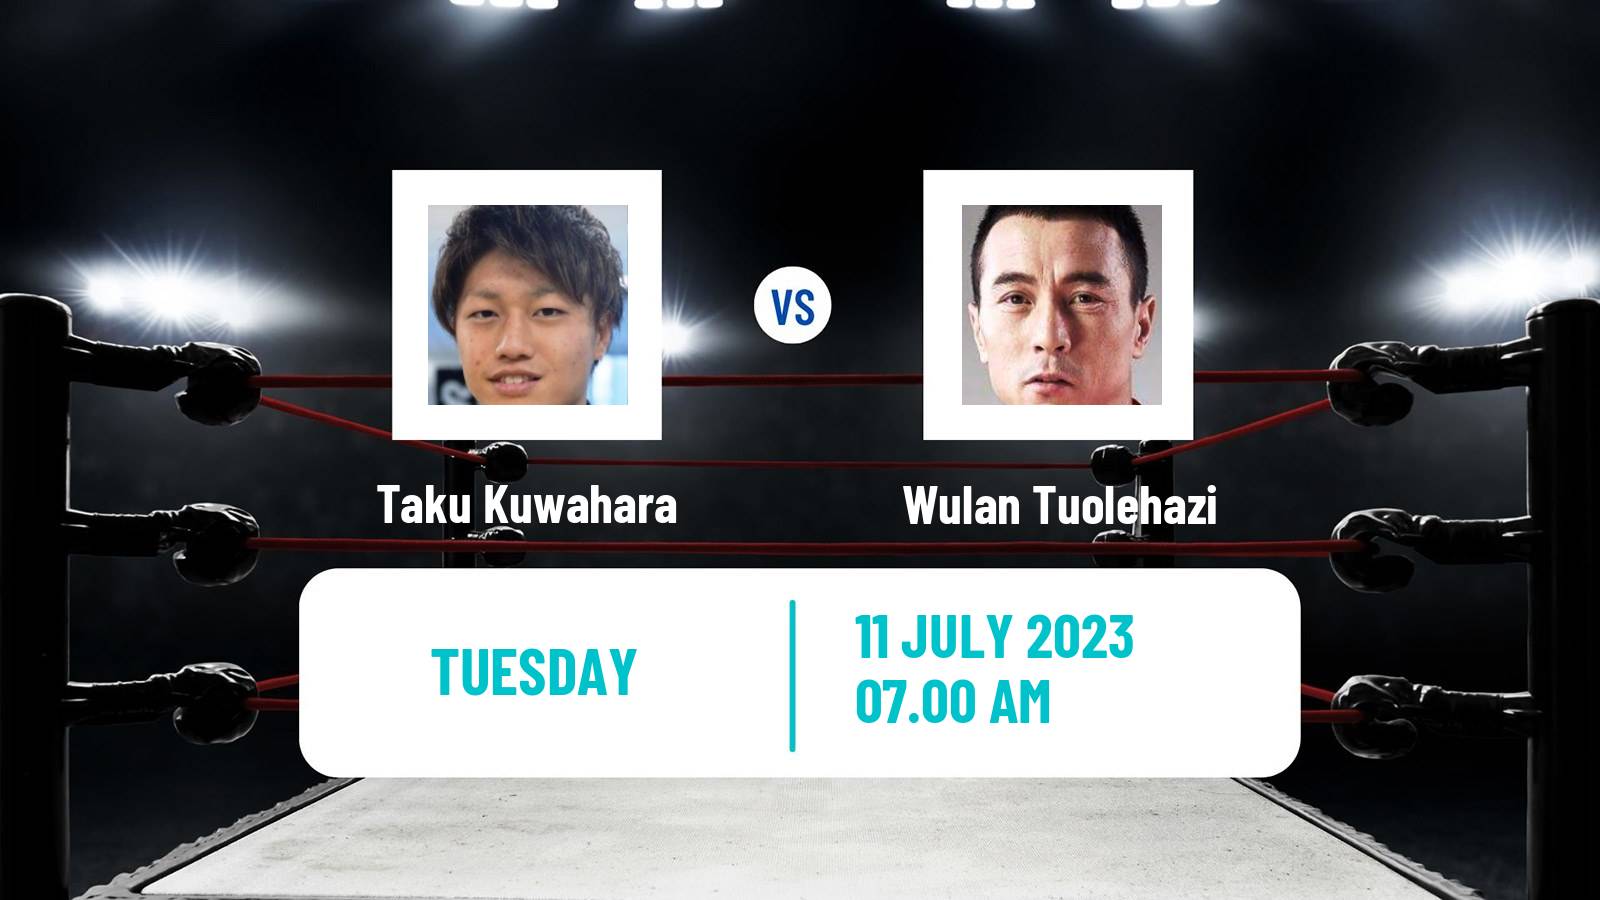 Boxing Flyweight Opbf Title Men Taku Kuwahara - Wulan Tuolehazi